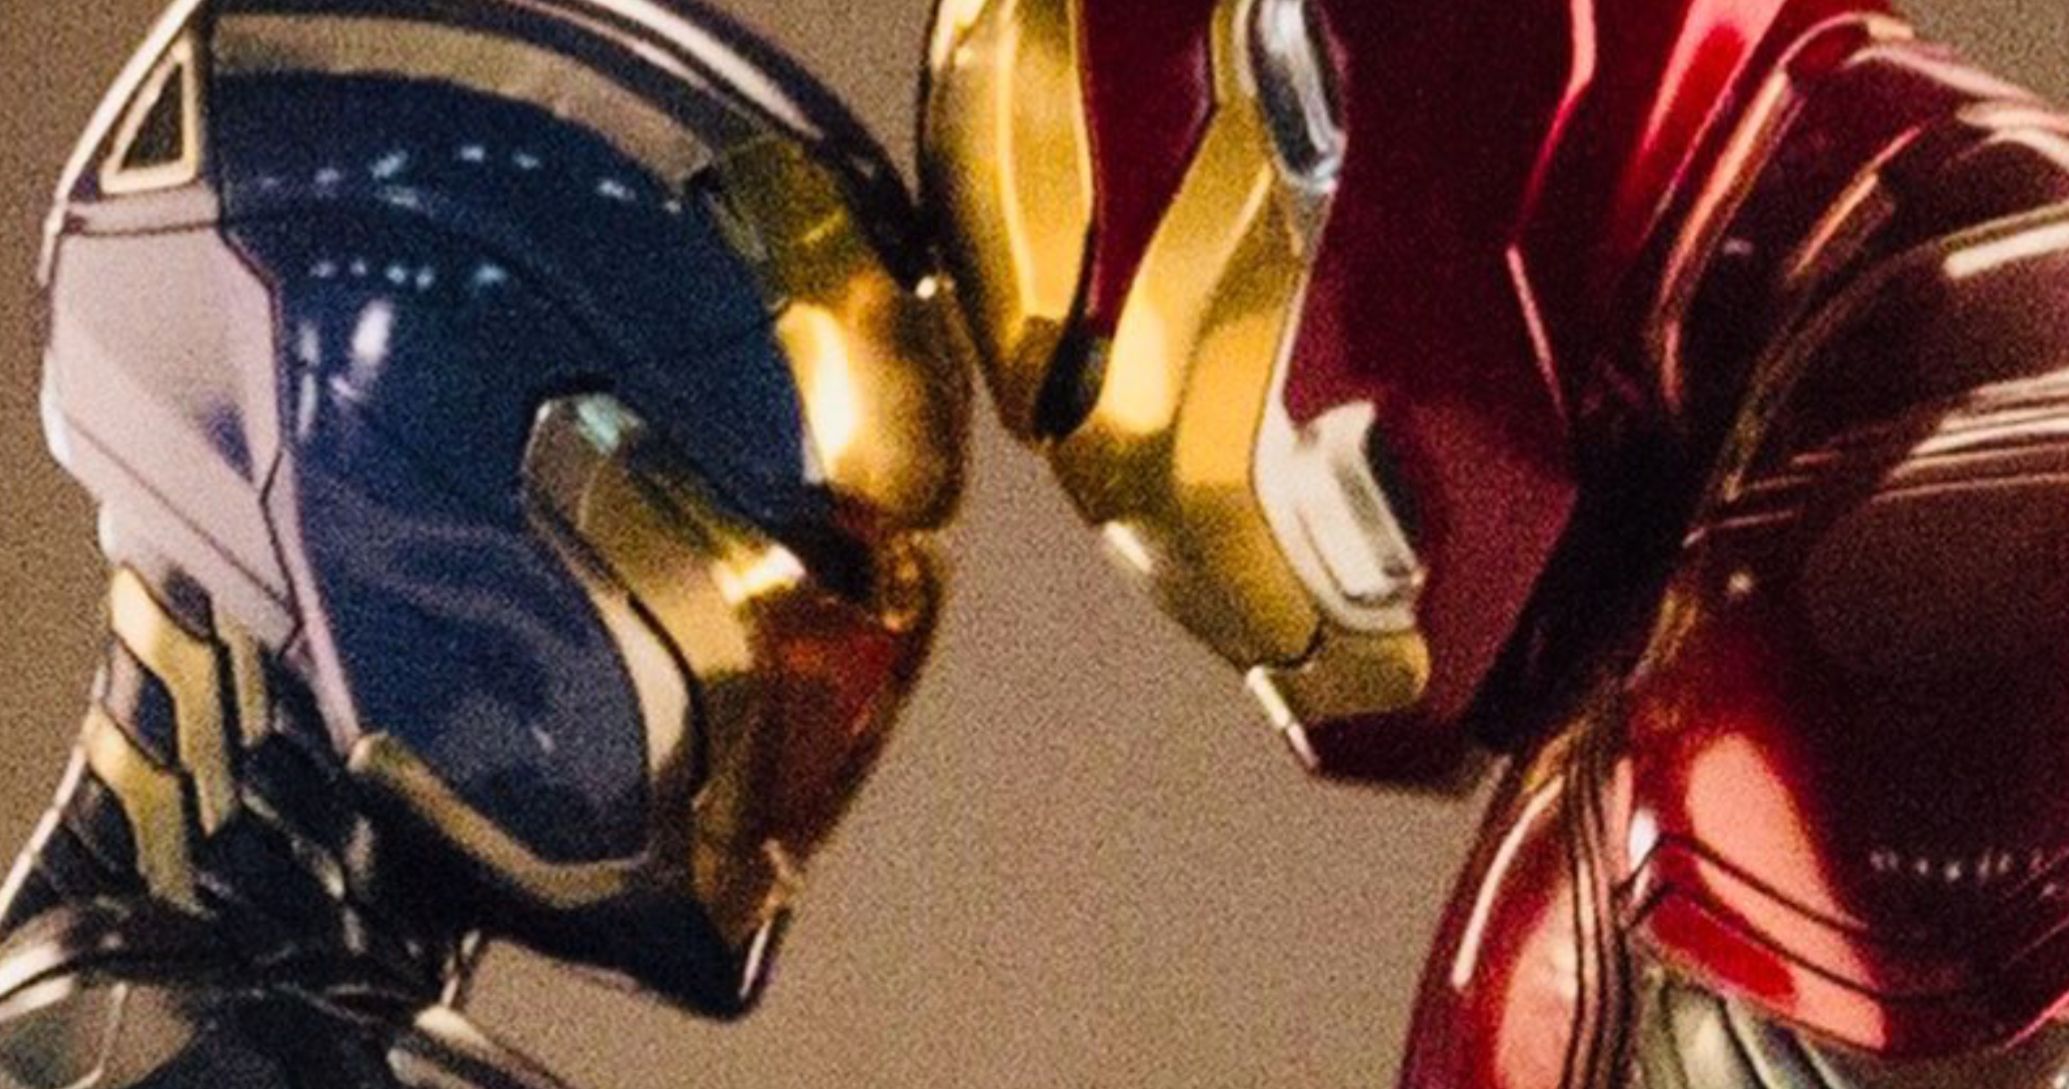 Iron Man and Rescue Unite in Unused Avengers: Endgame Promo Image